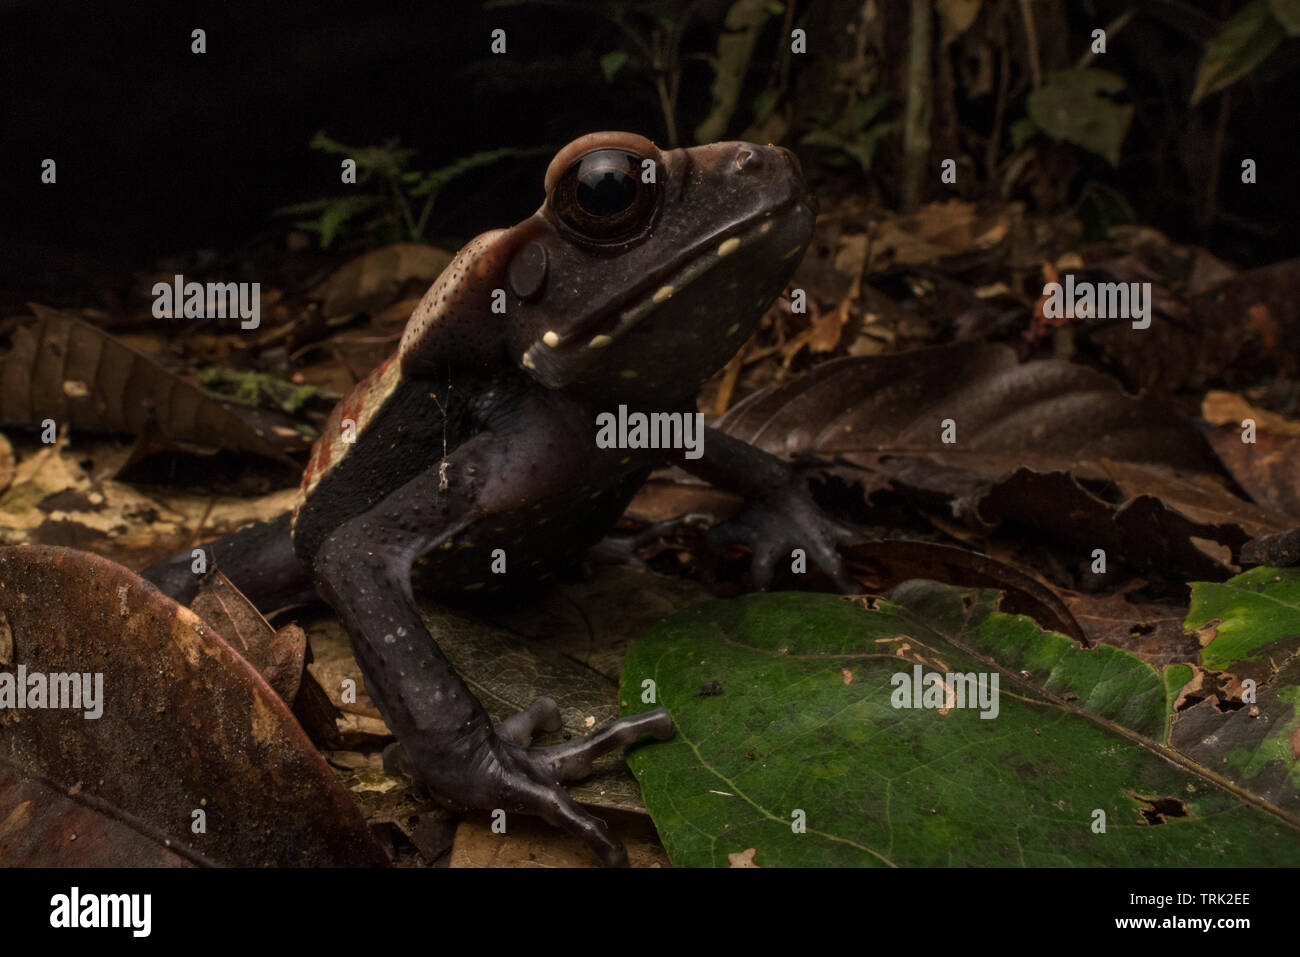 A juvenile spotted toad (Rhaebo guttatus) from Yasuni national park in the Ecuadorian Amazon. Stock Photo